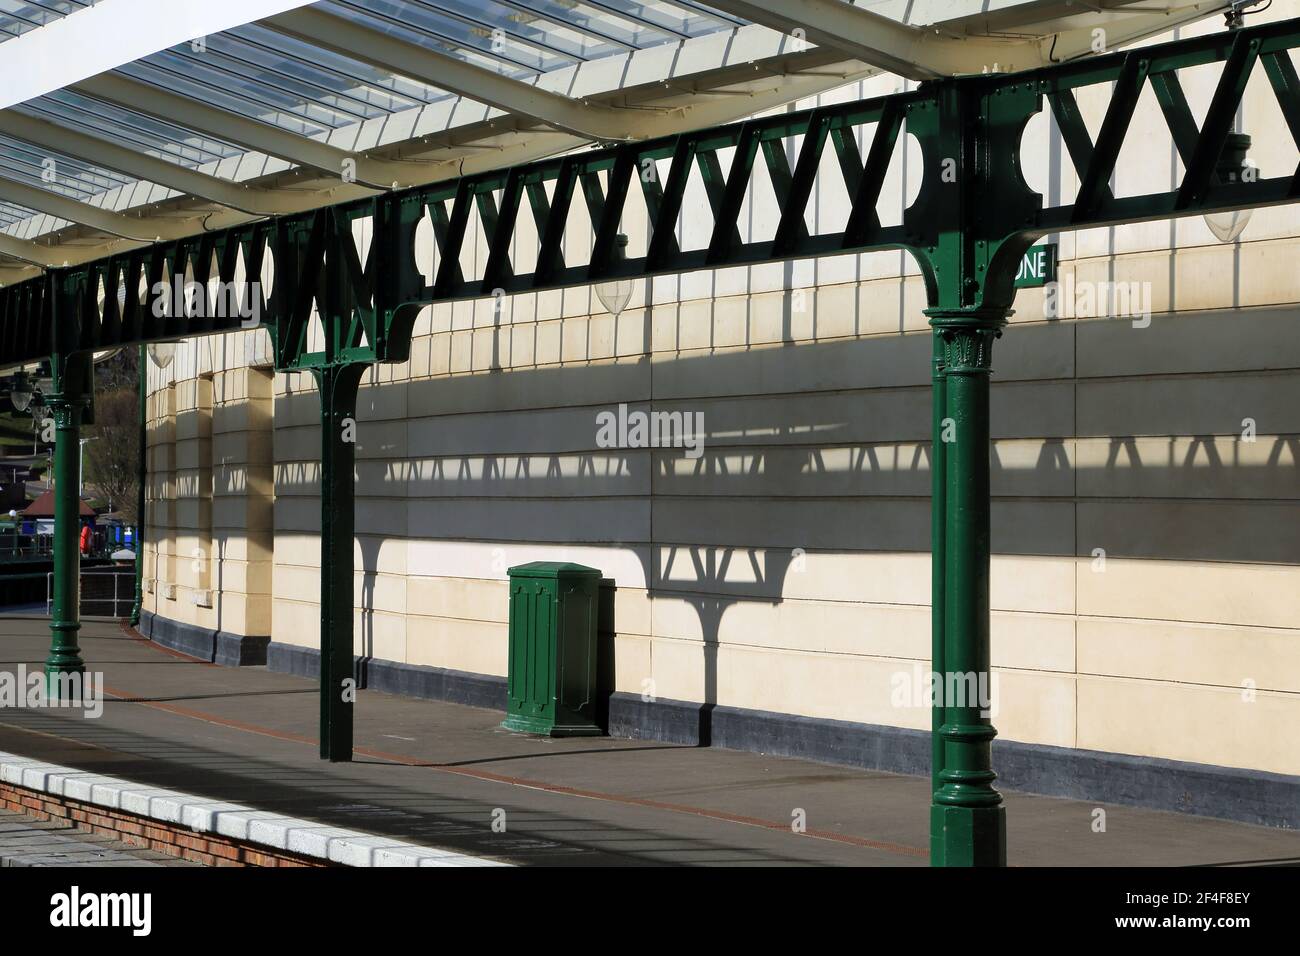 Platform on The Old Railway station on Folkestone Harbour Arm, Harbour Arm, Folkestone, Kent, England, United Kingdom Stock Photo